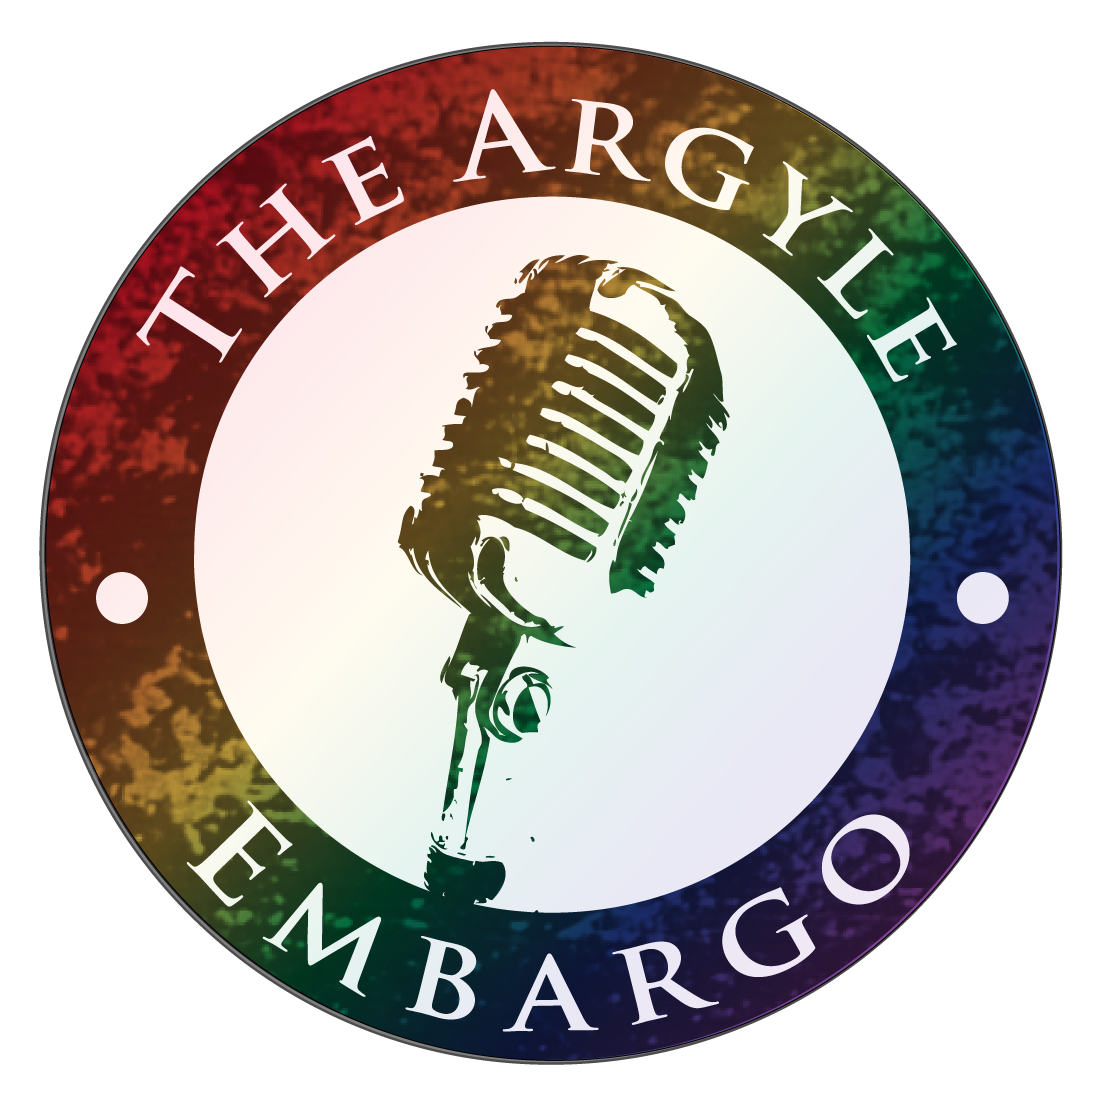 The Argyle Embargo